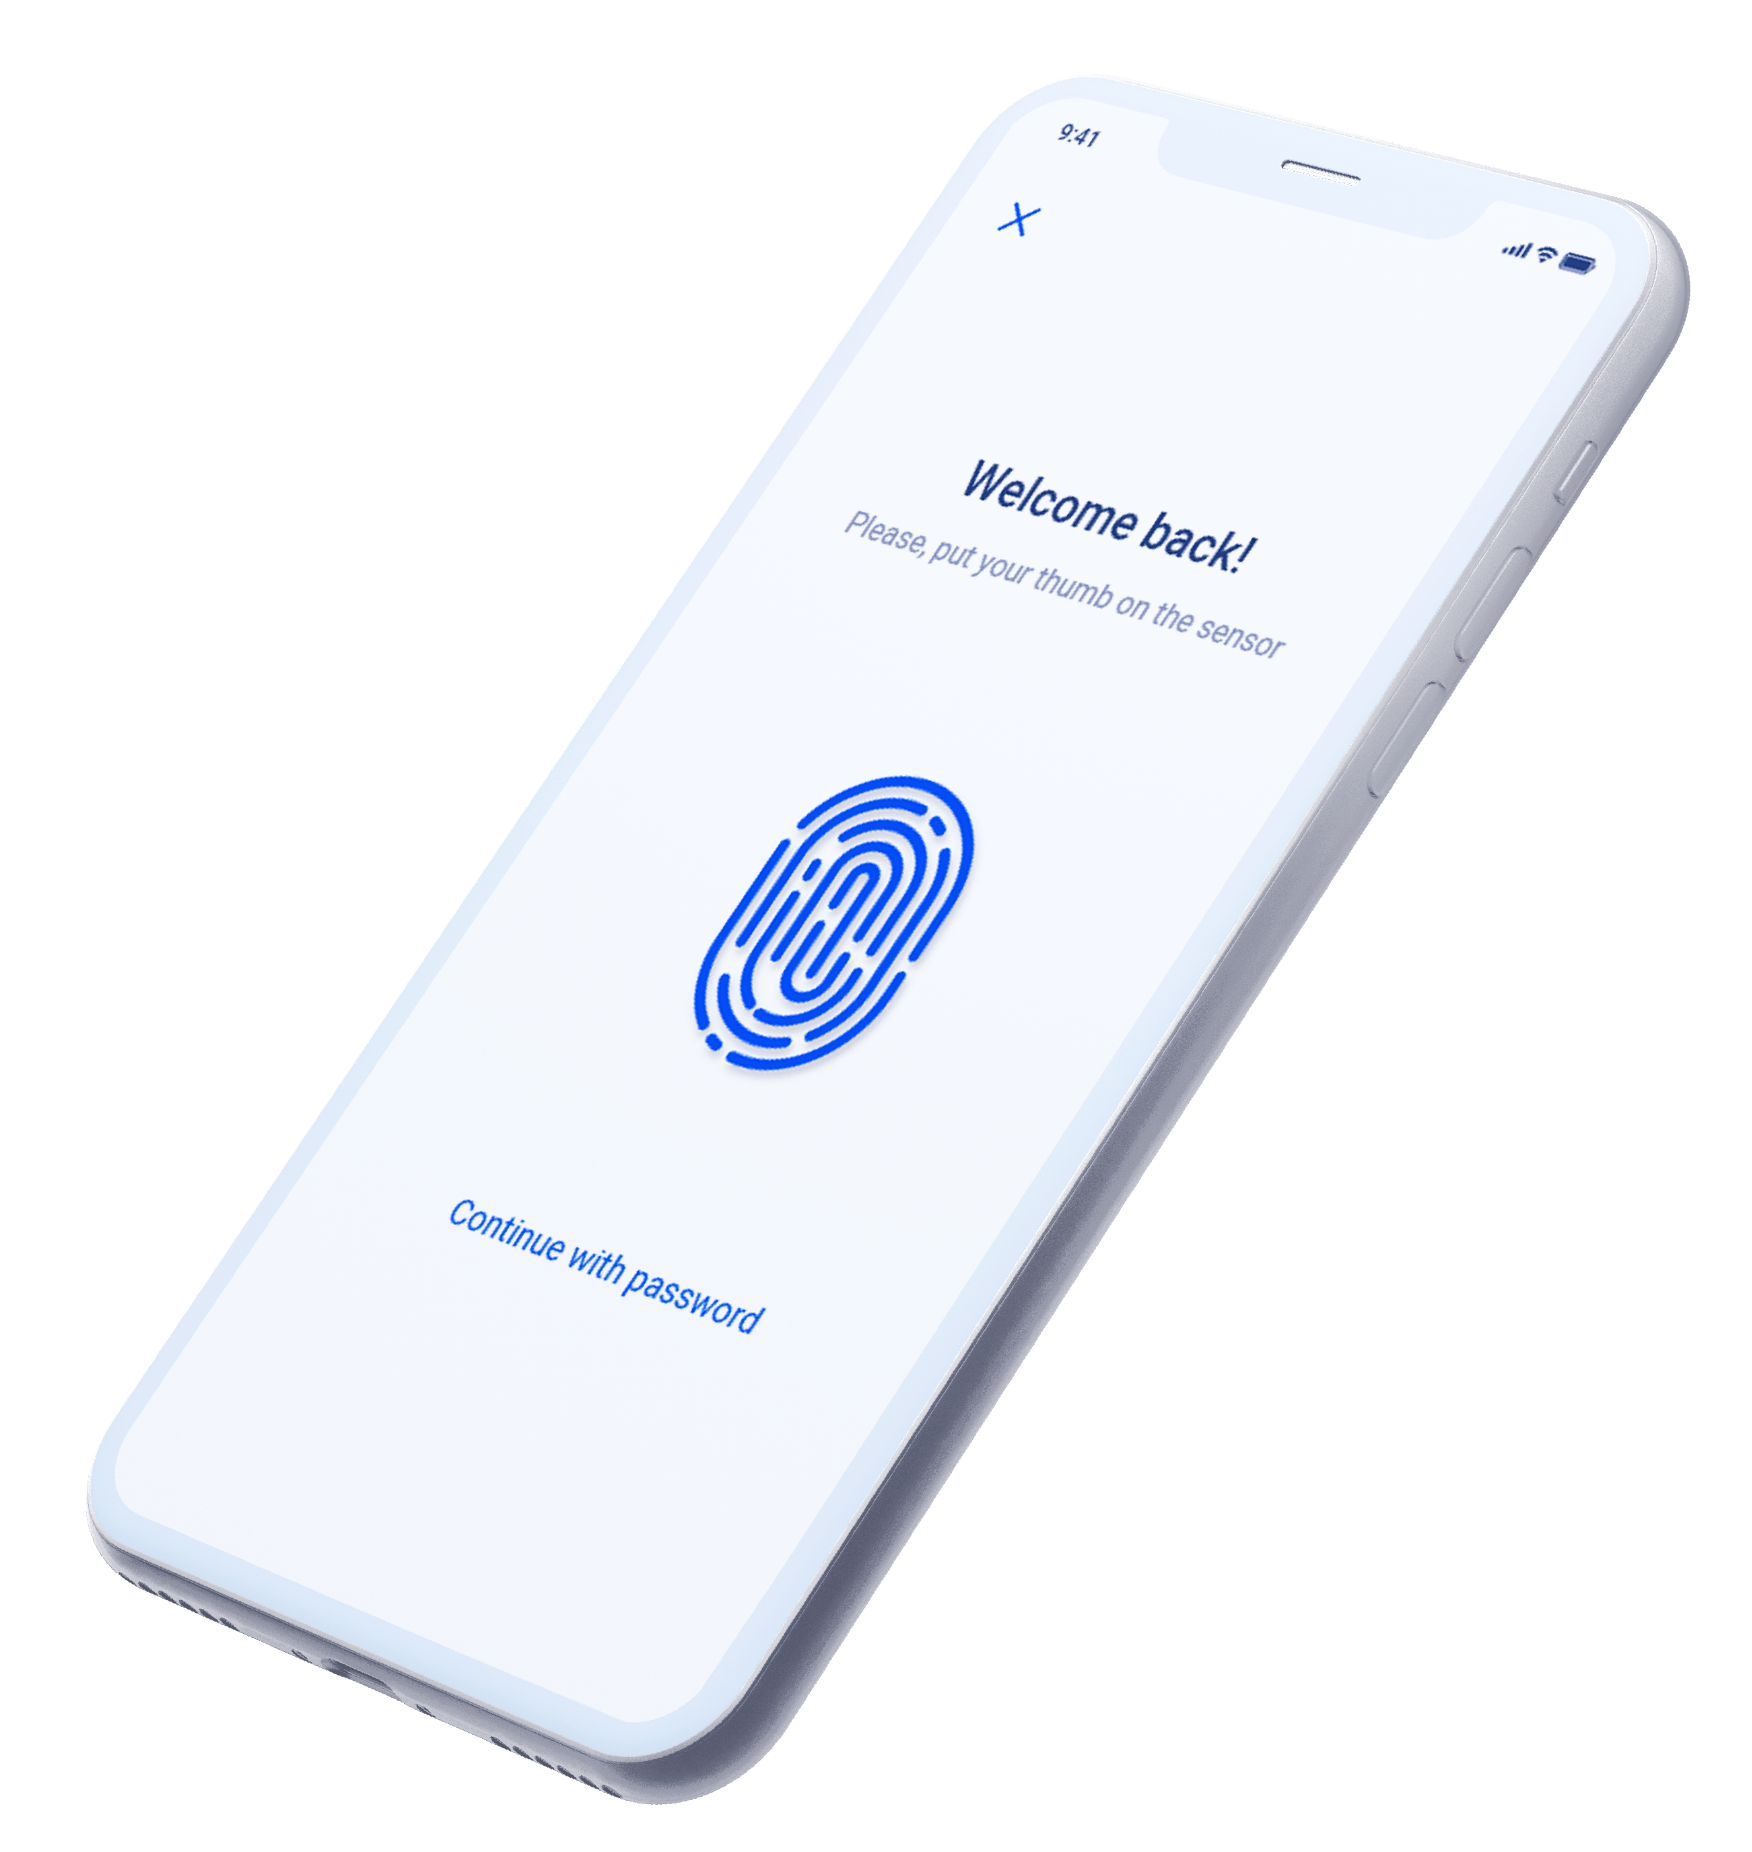 Remitbee app security iphone mockup